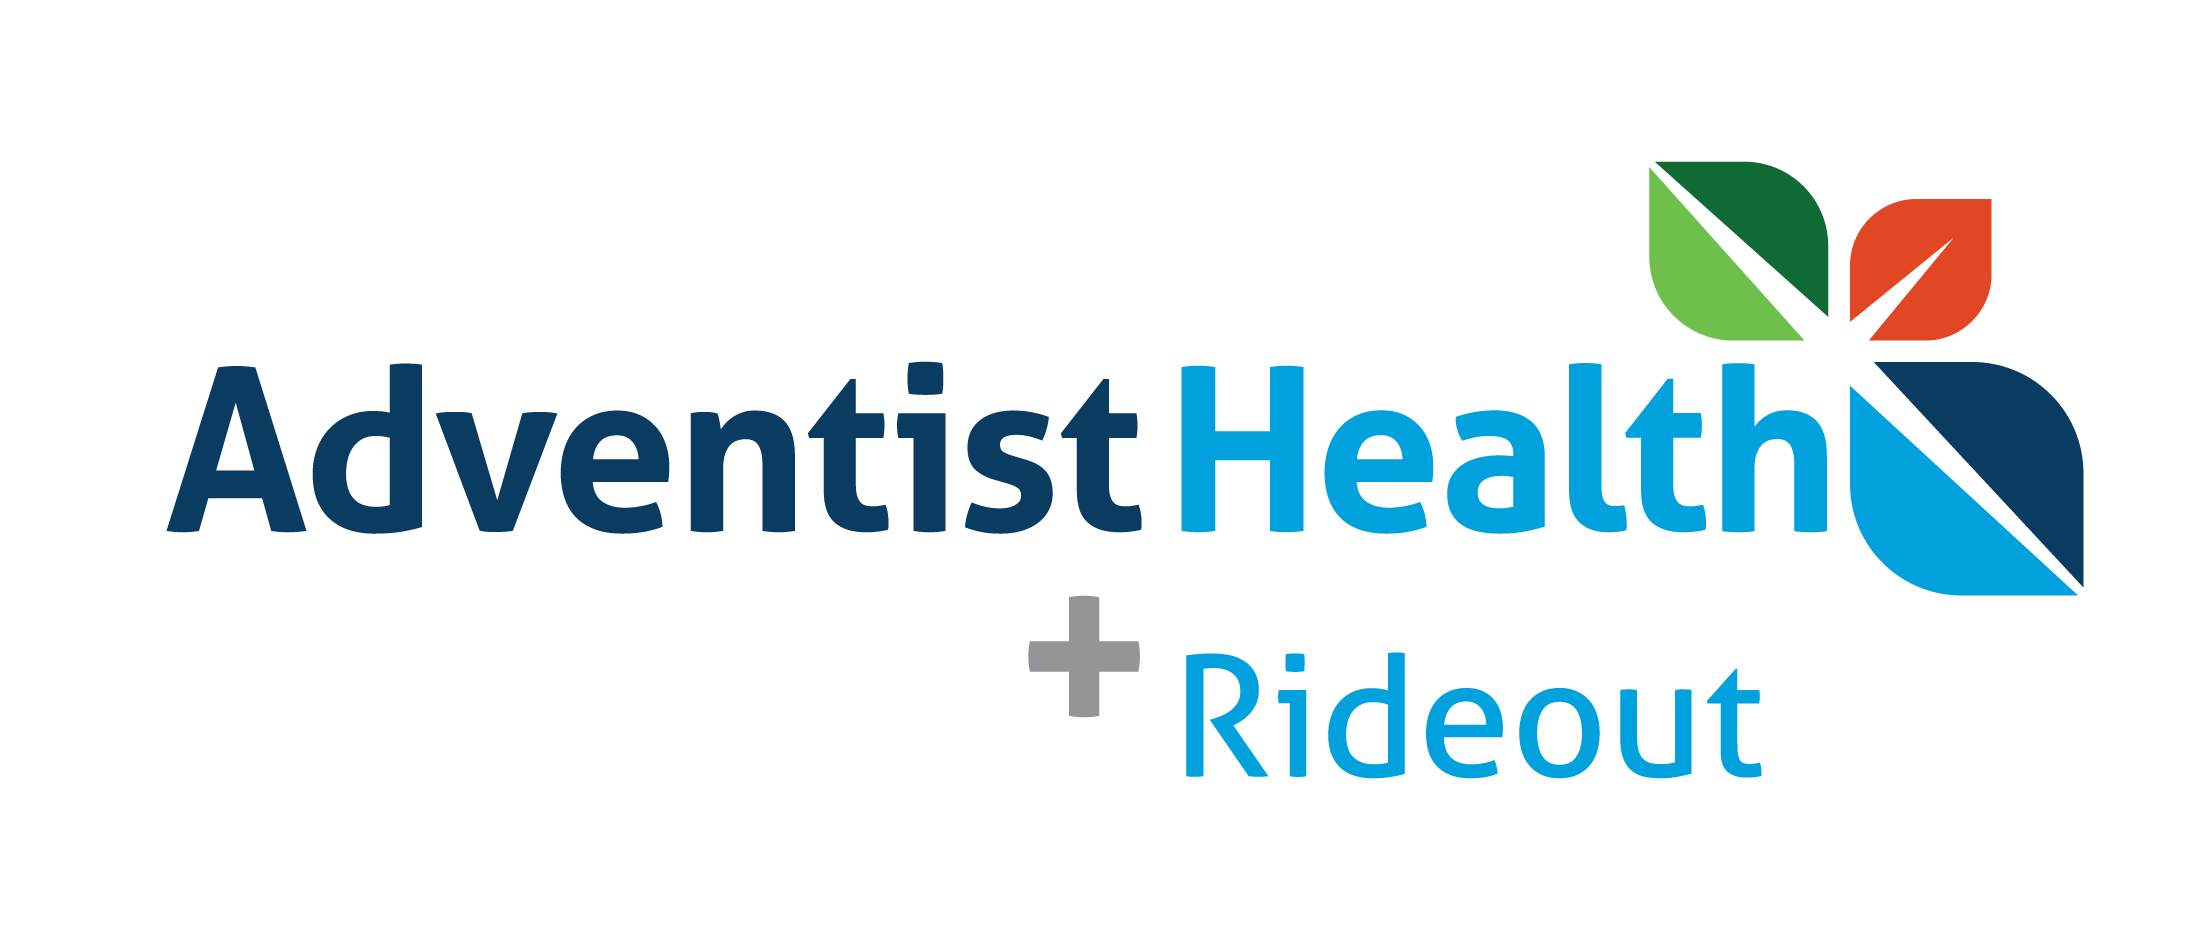 B. Adventist Health & Rideout (Hospital actual)